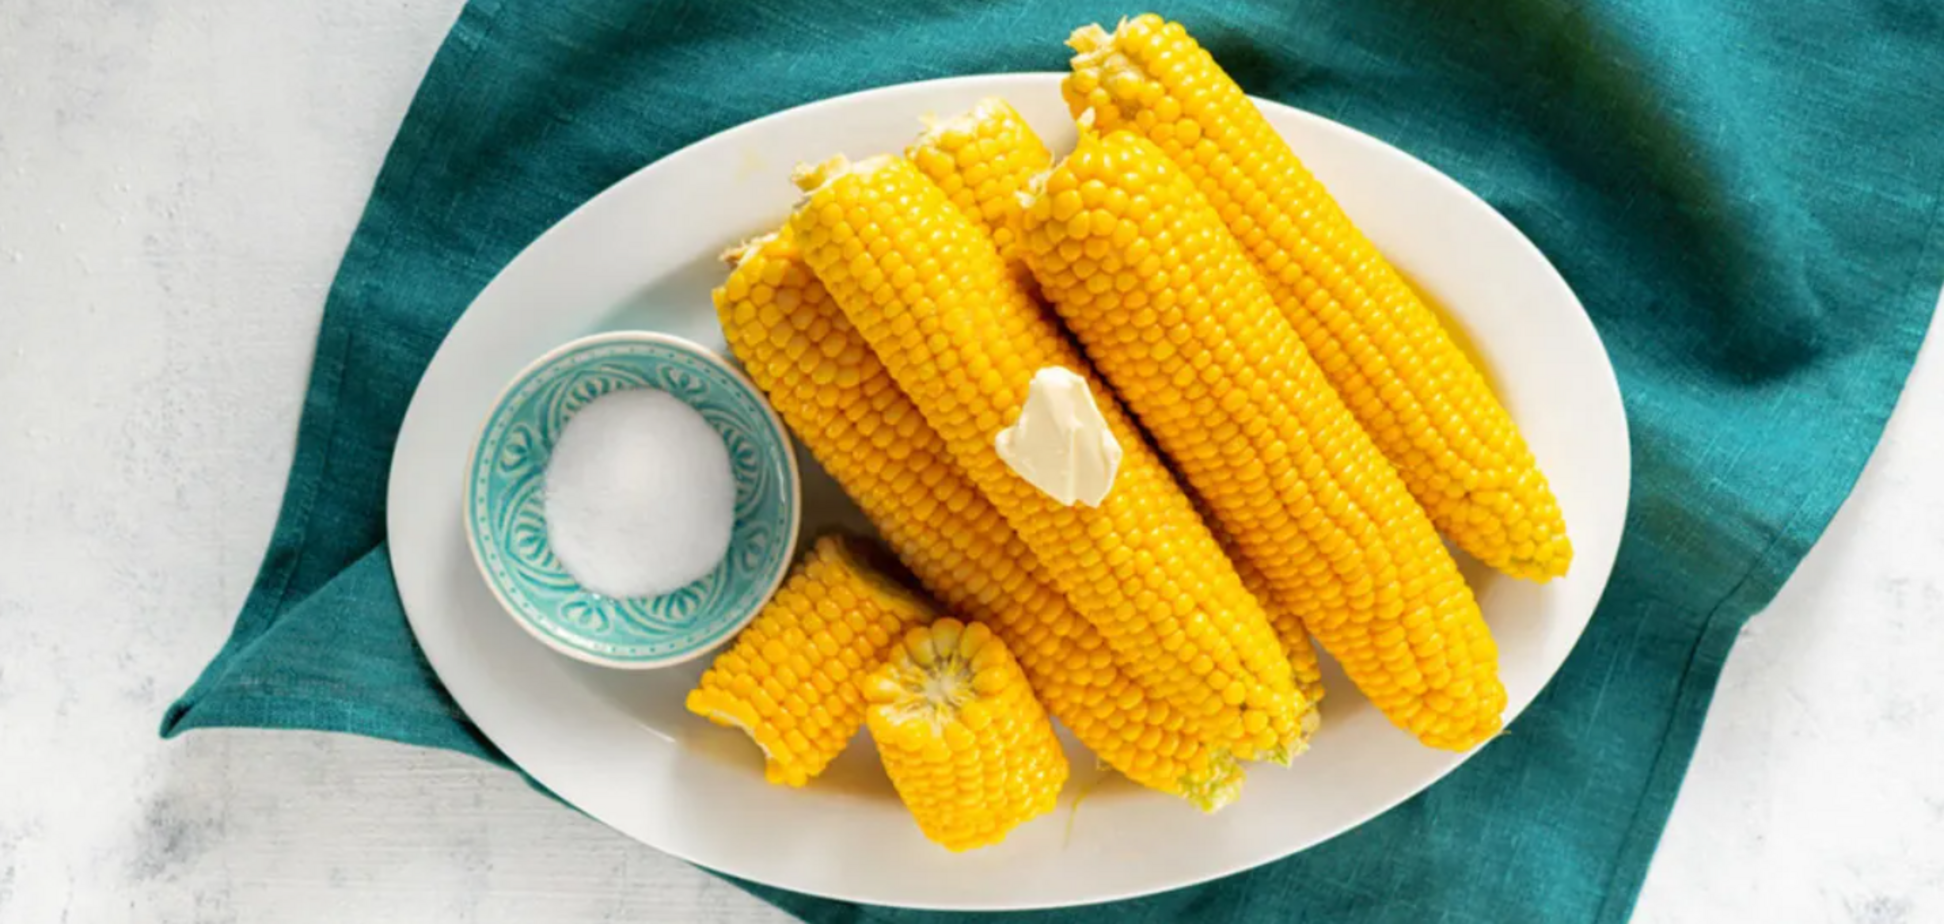 Вареная кукуруза с маслом